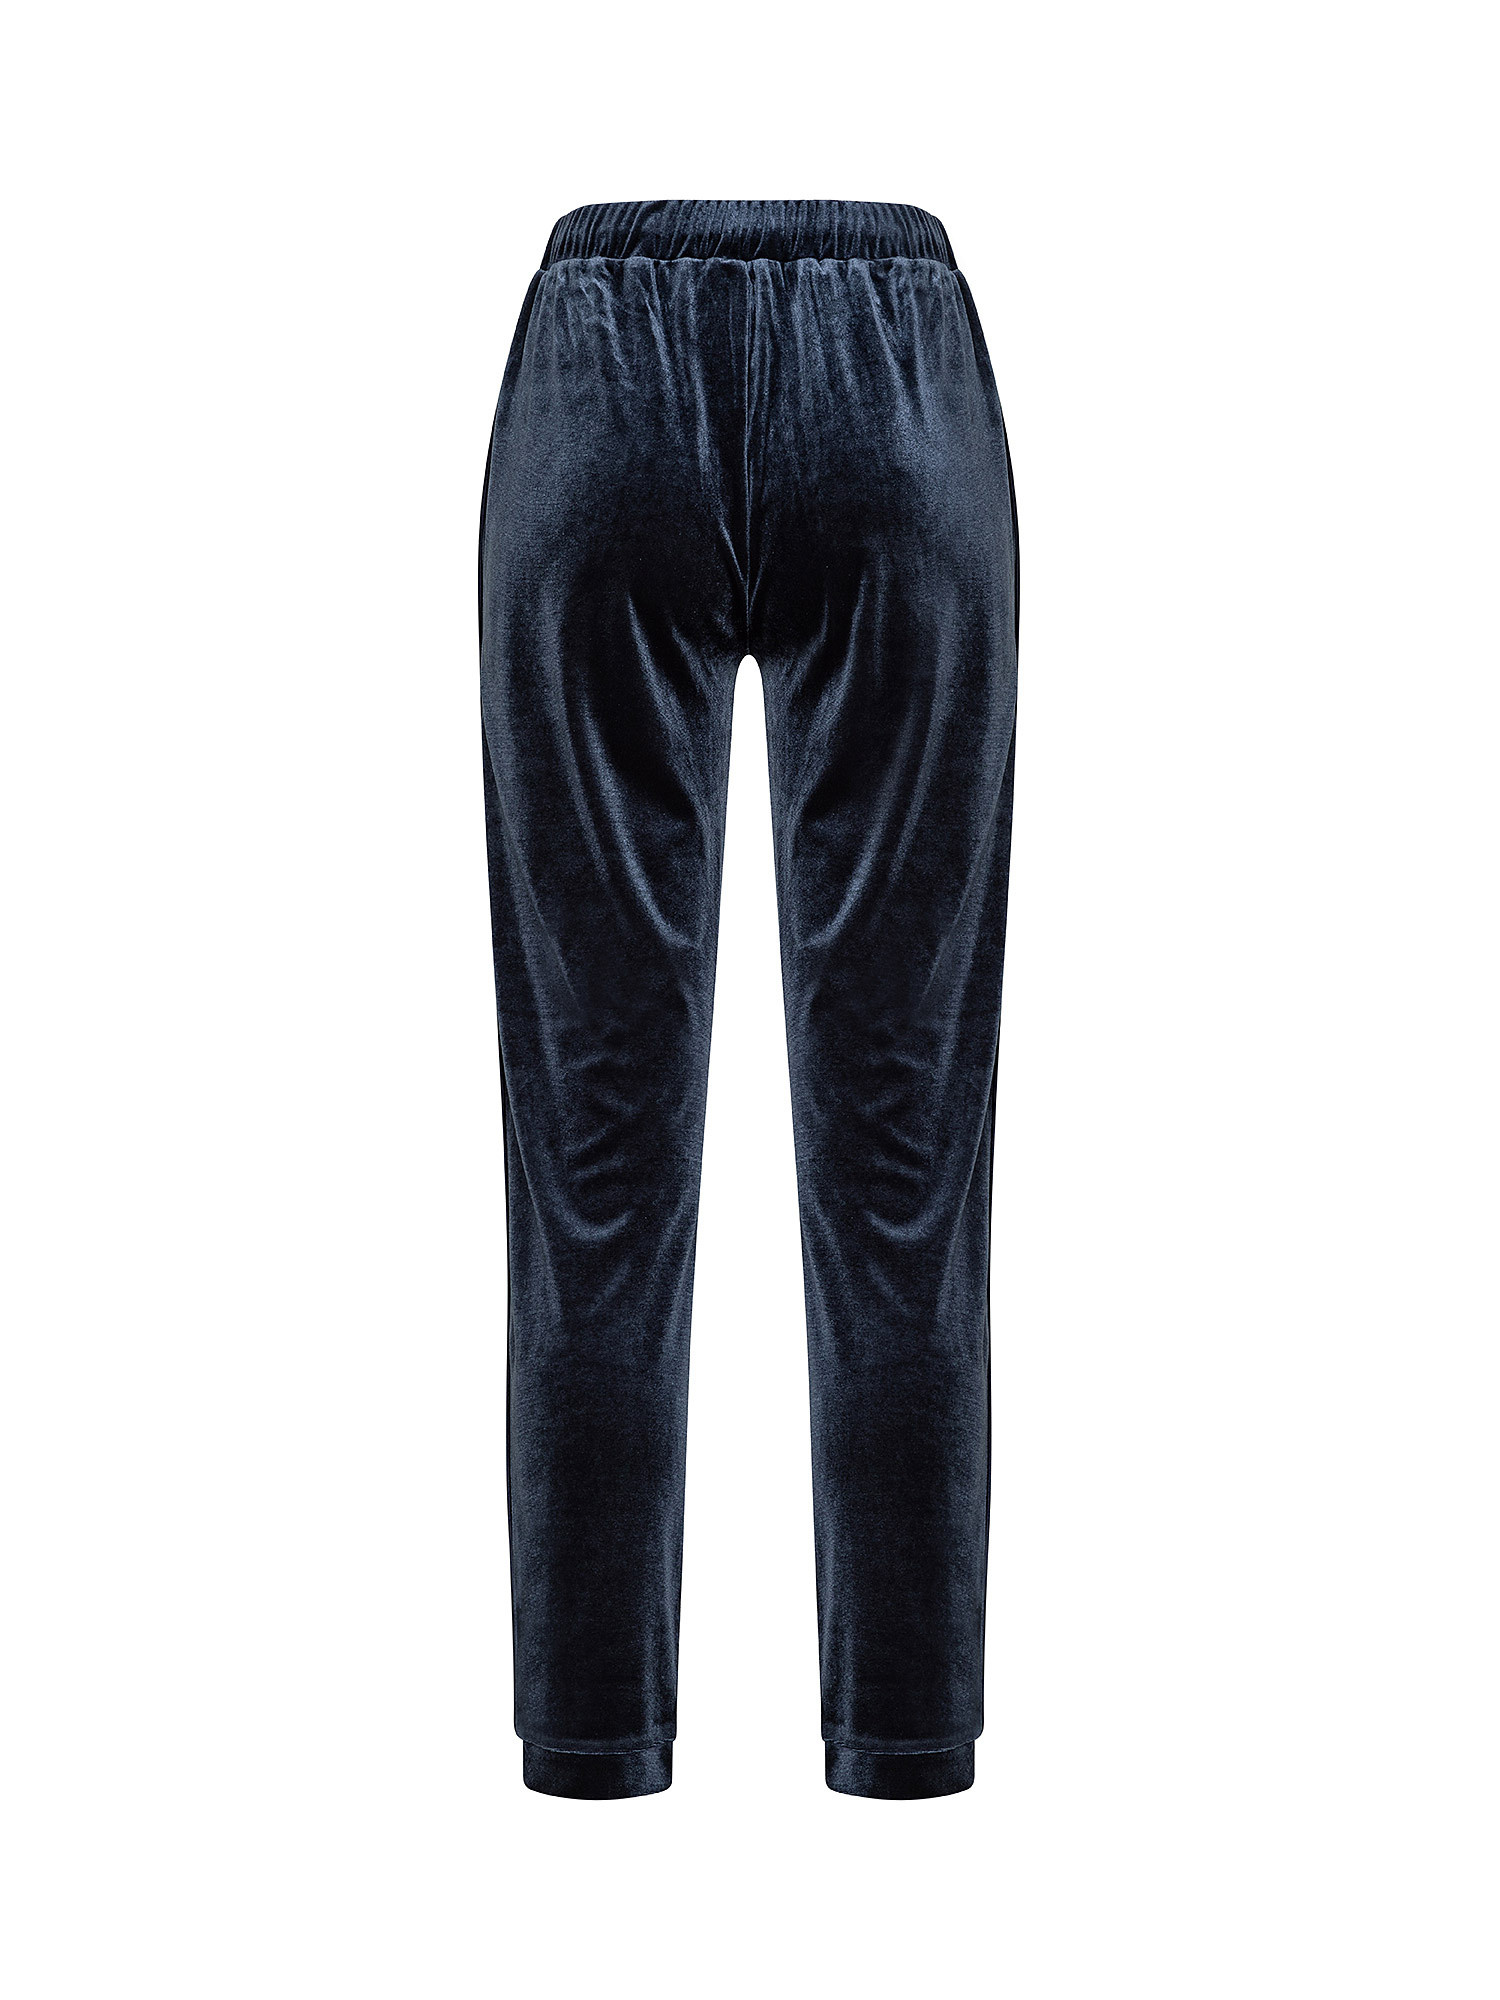 pantalone in ciniglia, Blu, large image number 1